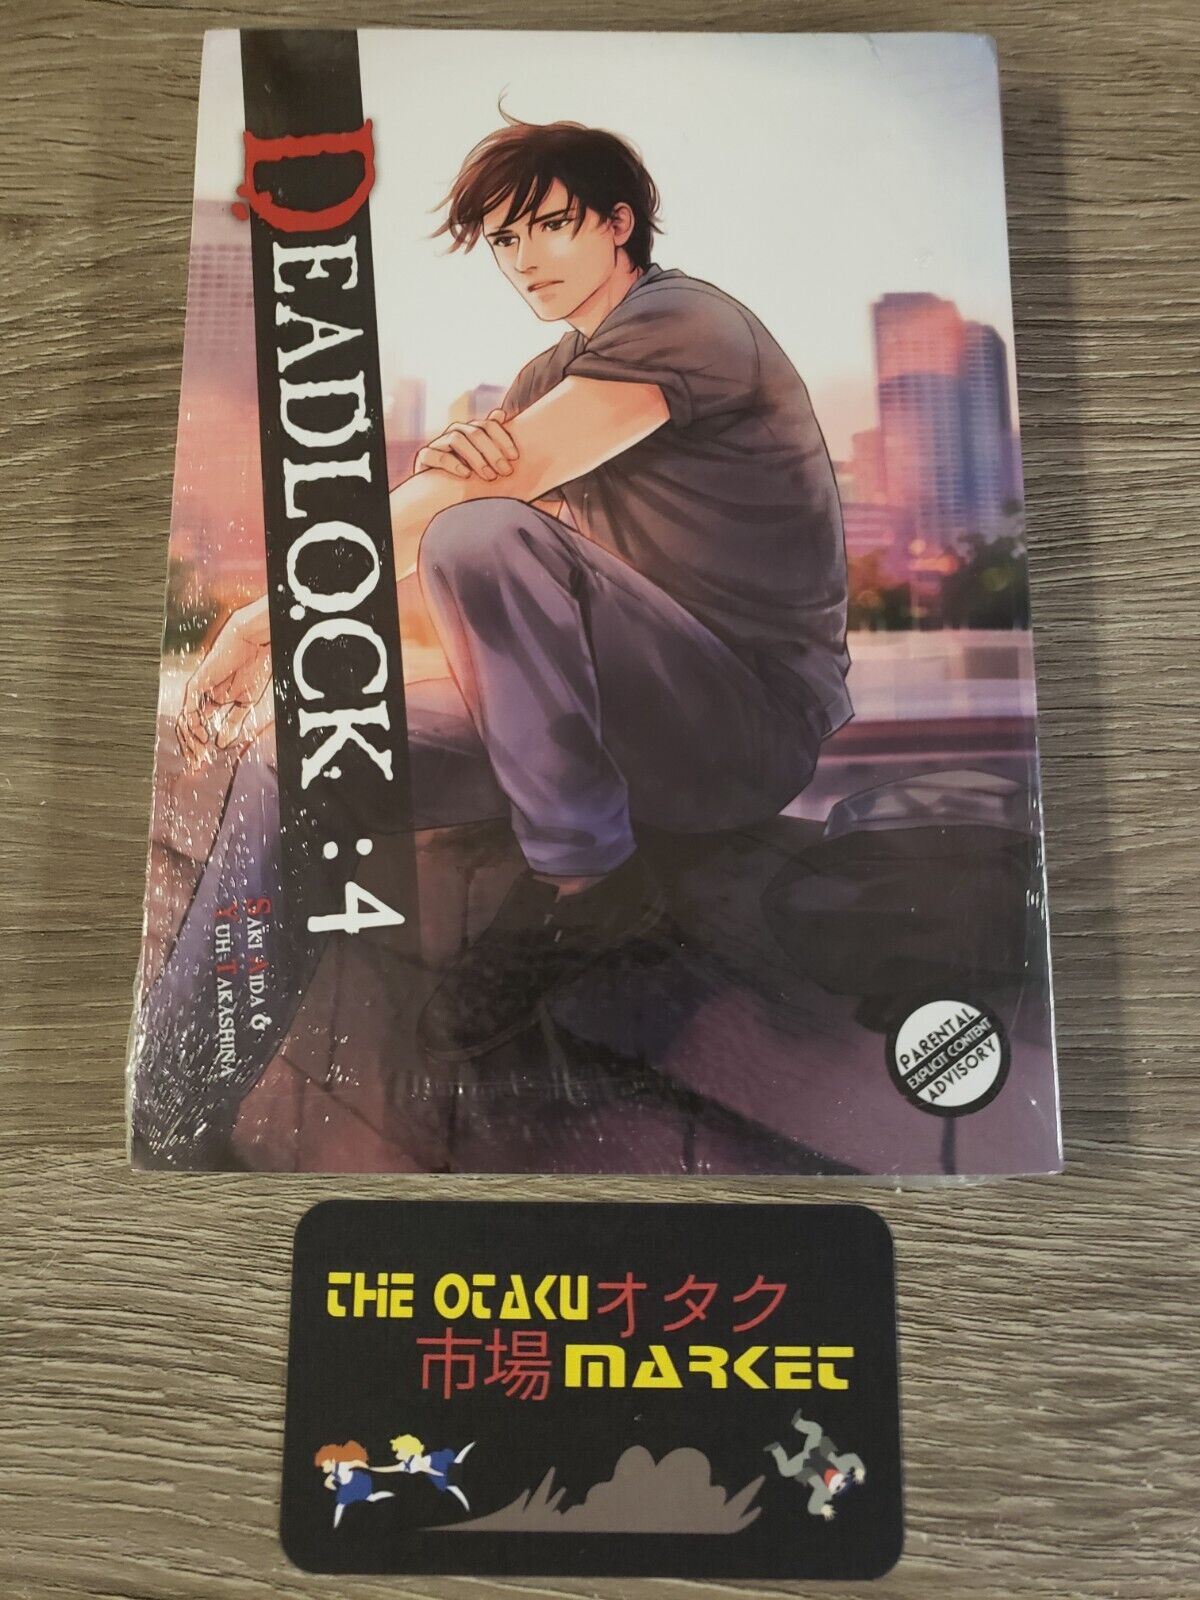 Deadlock vol. 4 by Saki Aida / New Yaoi manga form June